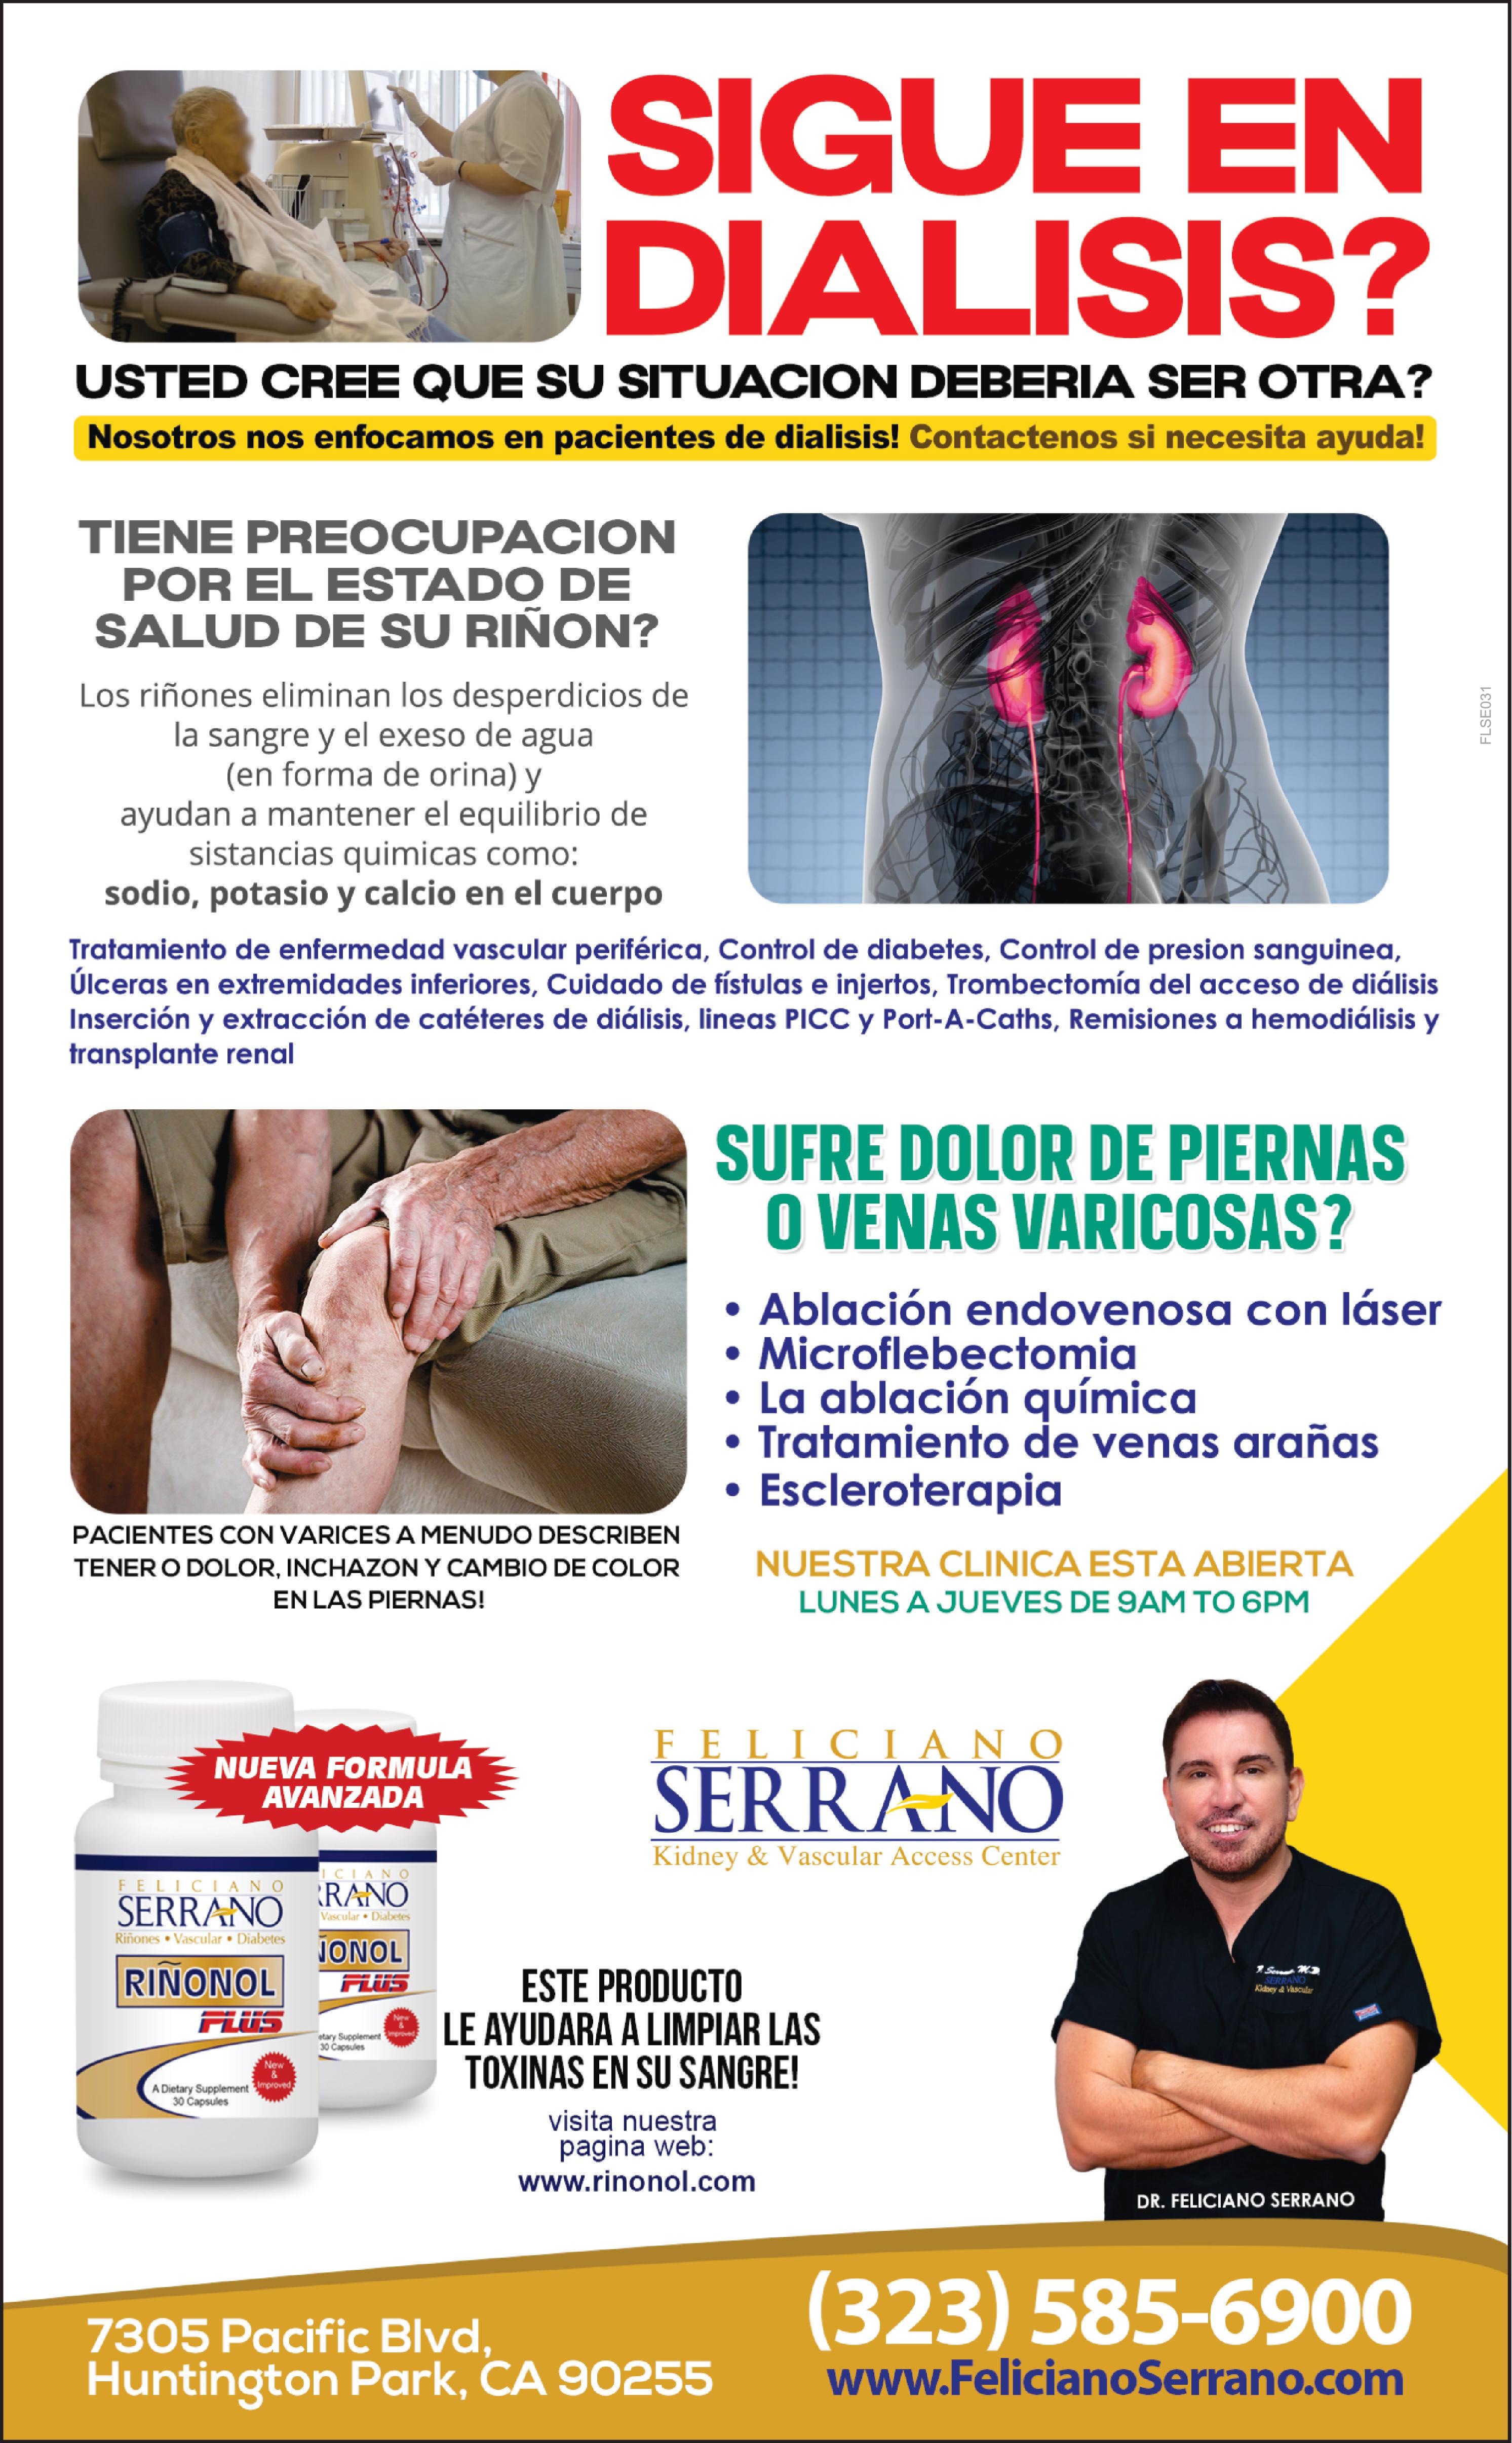 Serrano Kidney & Vascular Acces Center